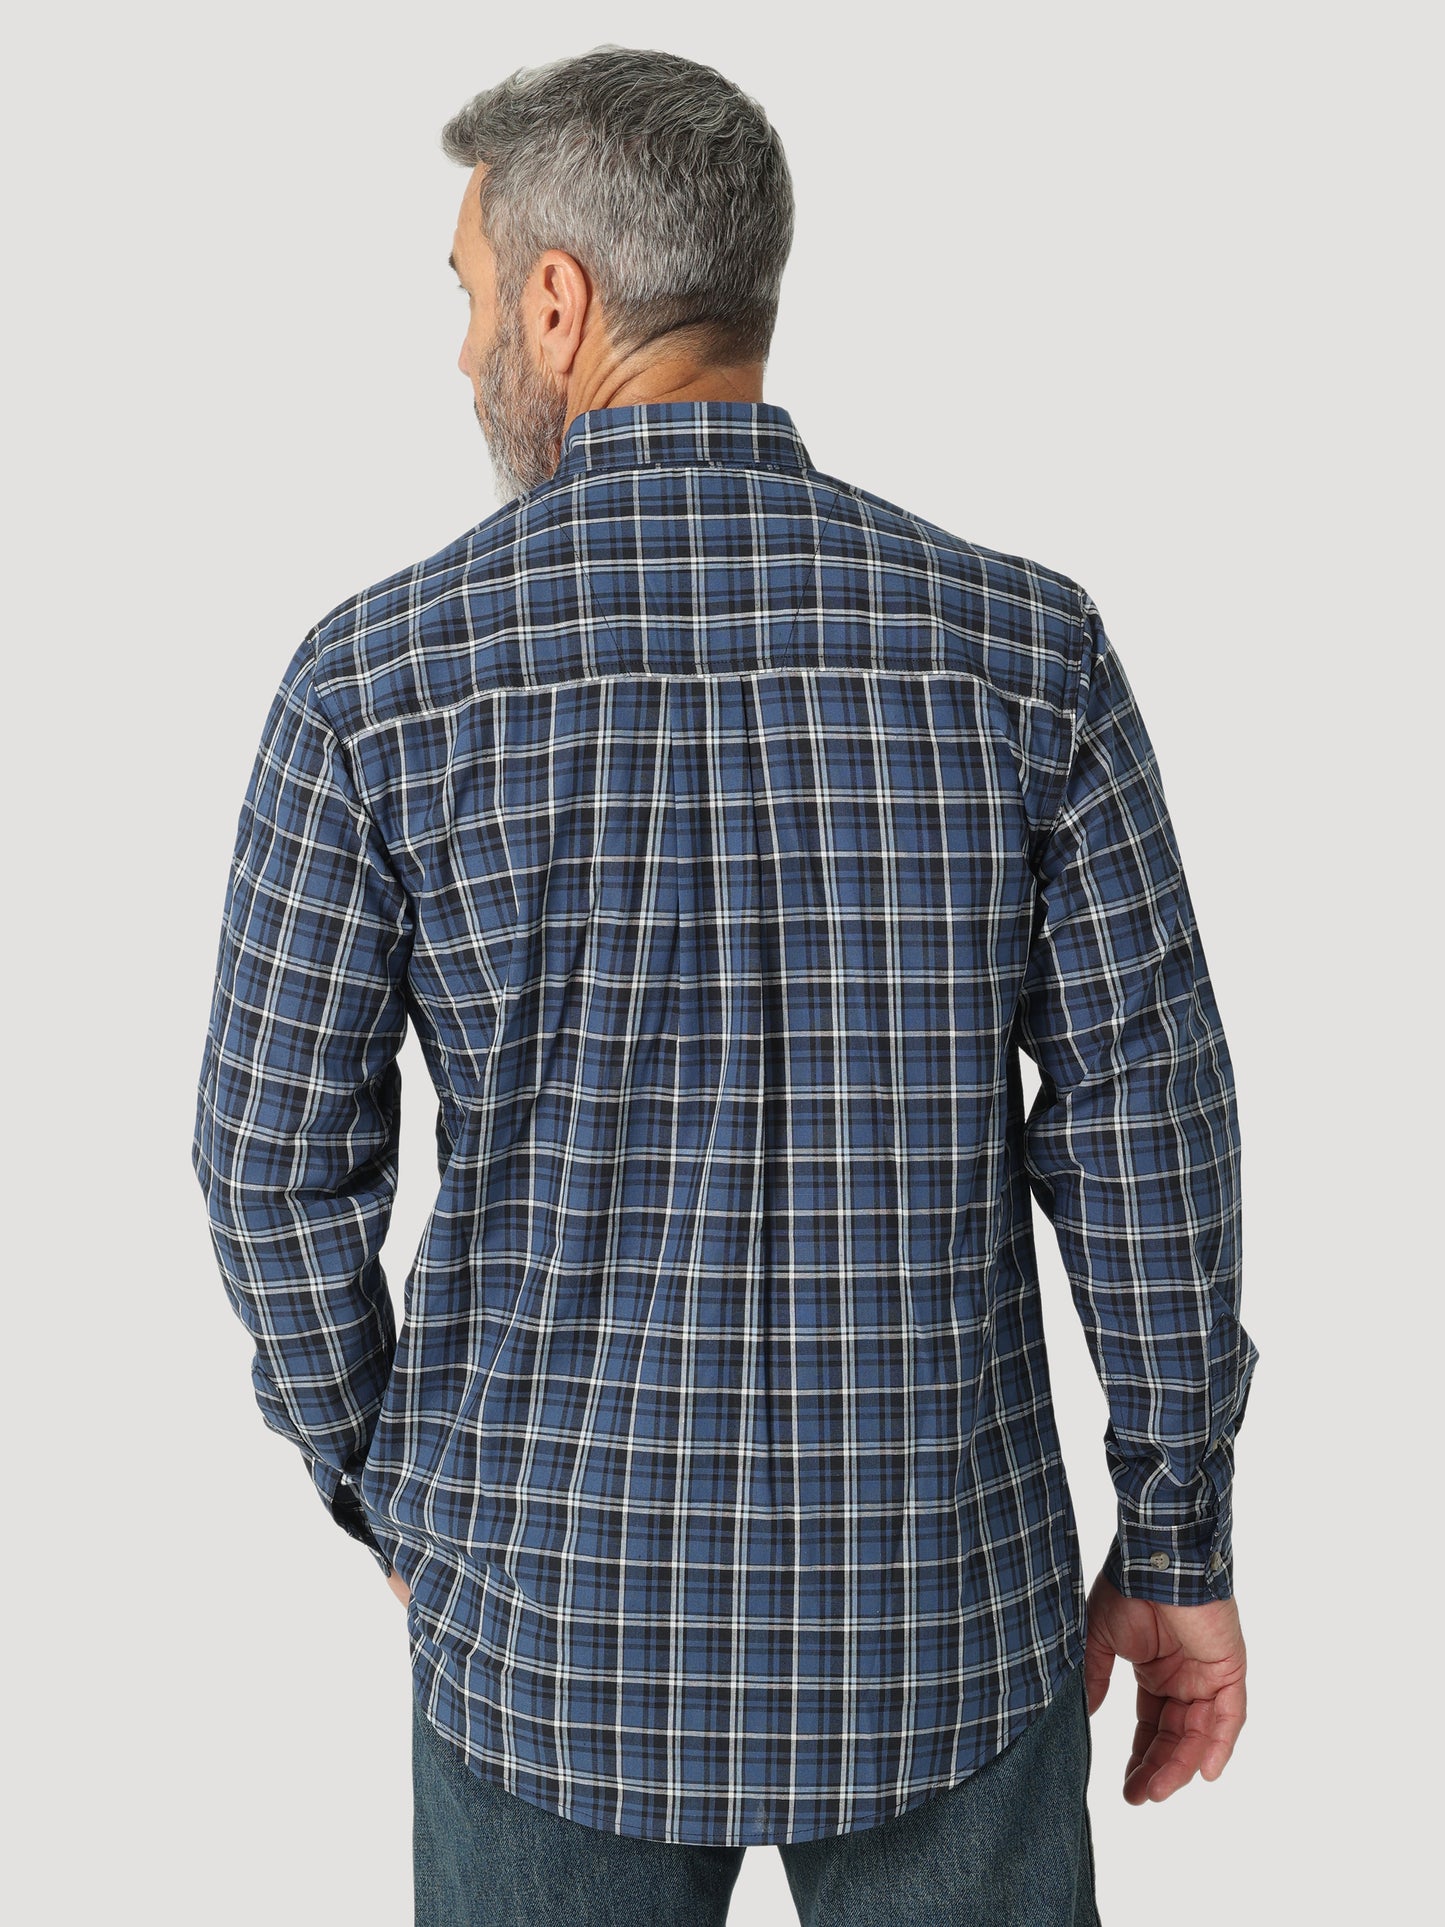 Blue Ridge Plaid Long Sleeve Woven Shirt